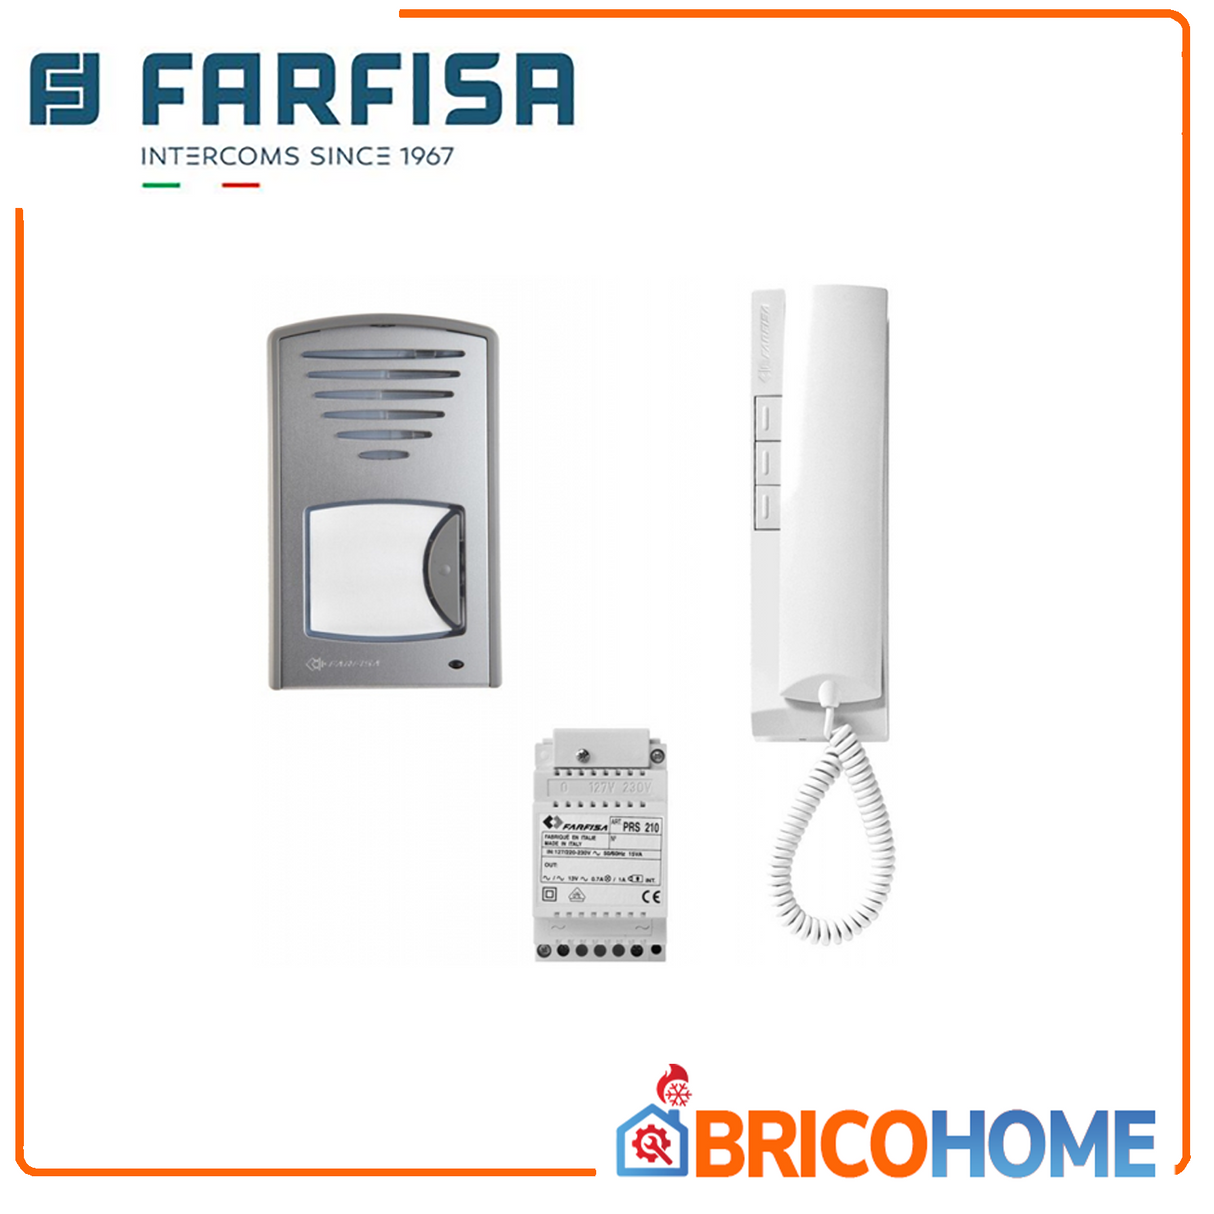 1CKSD 2 wire (1+1) one-family audio interphone kit - FARFISA -